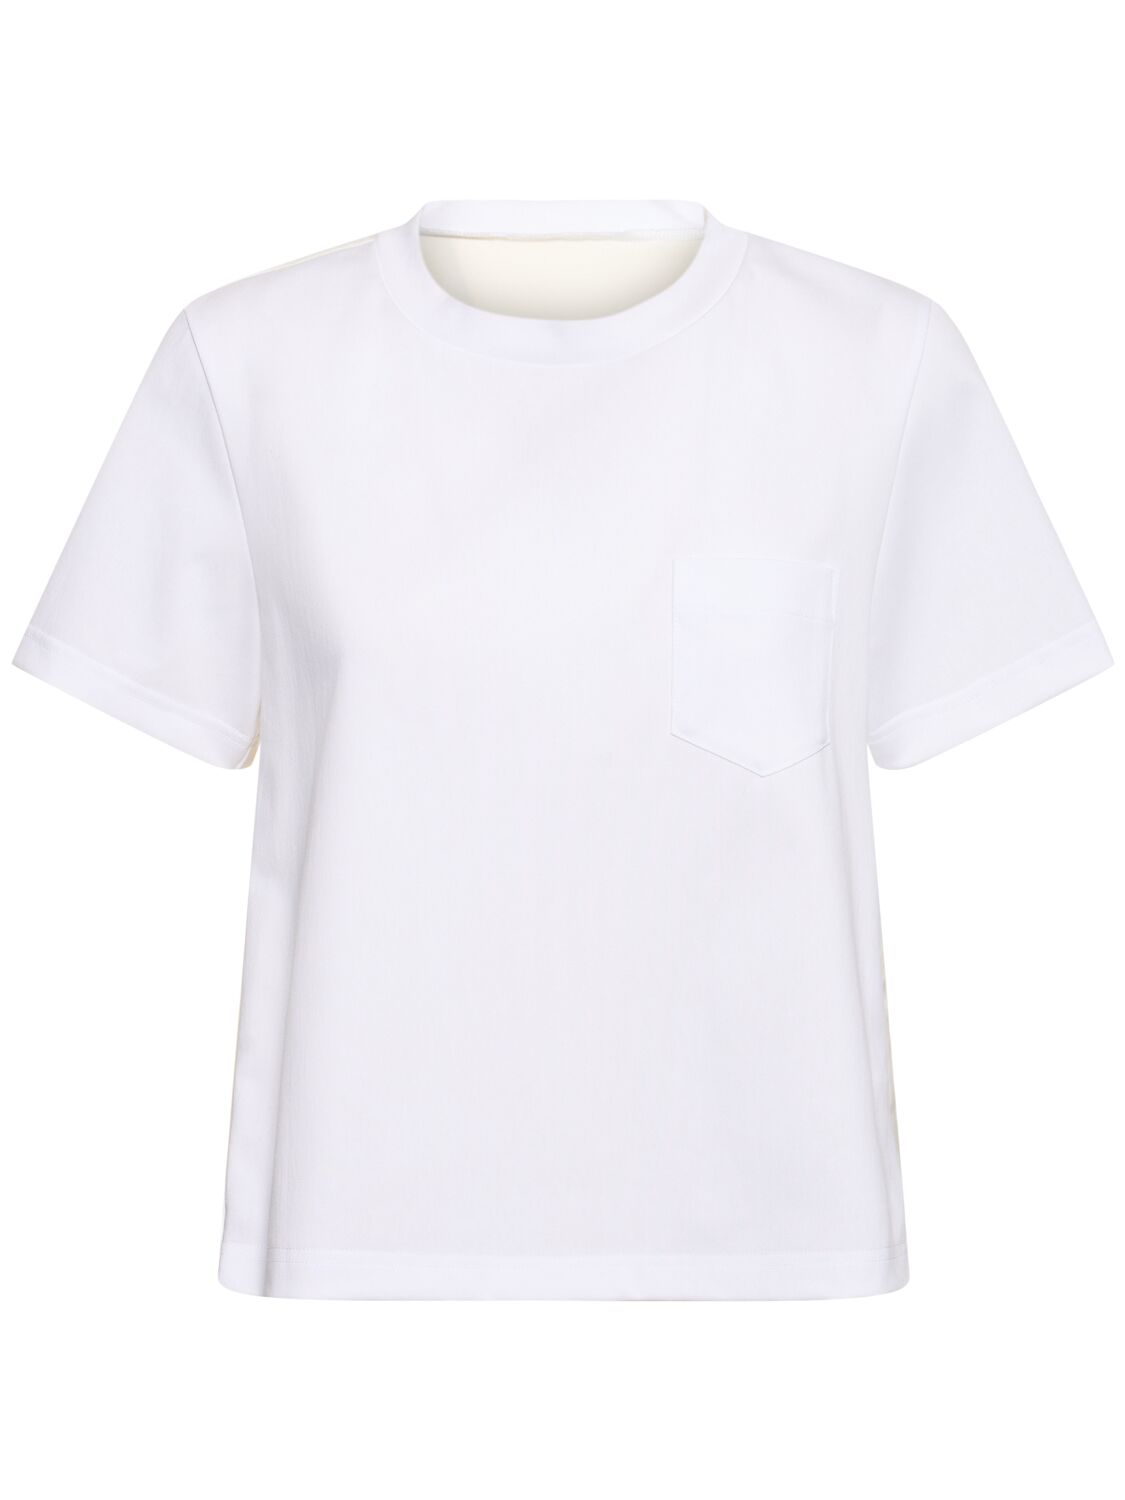 Image of Cotton Jersey & Nylon Twill T-shirt